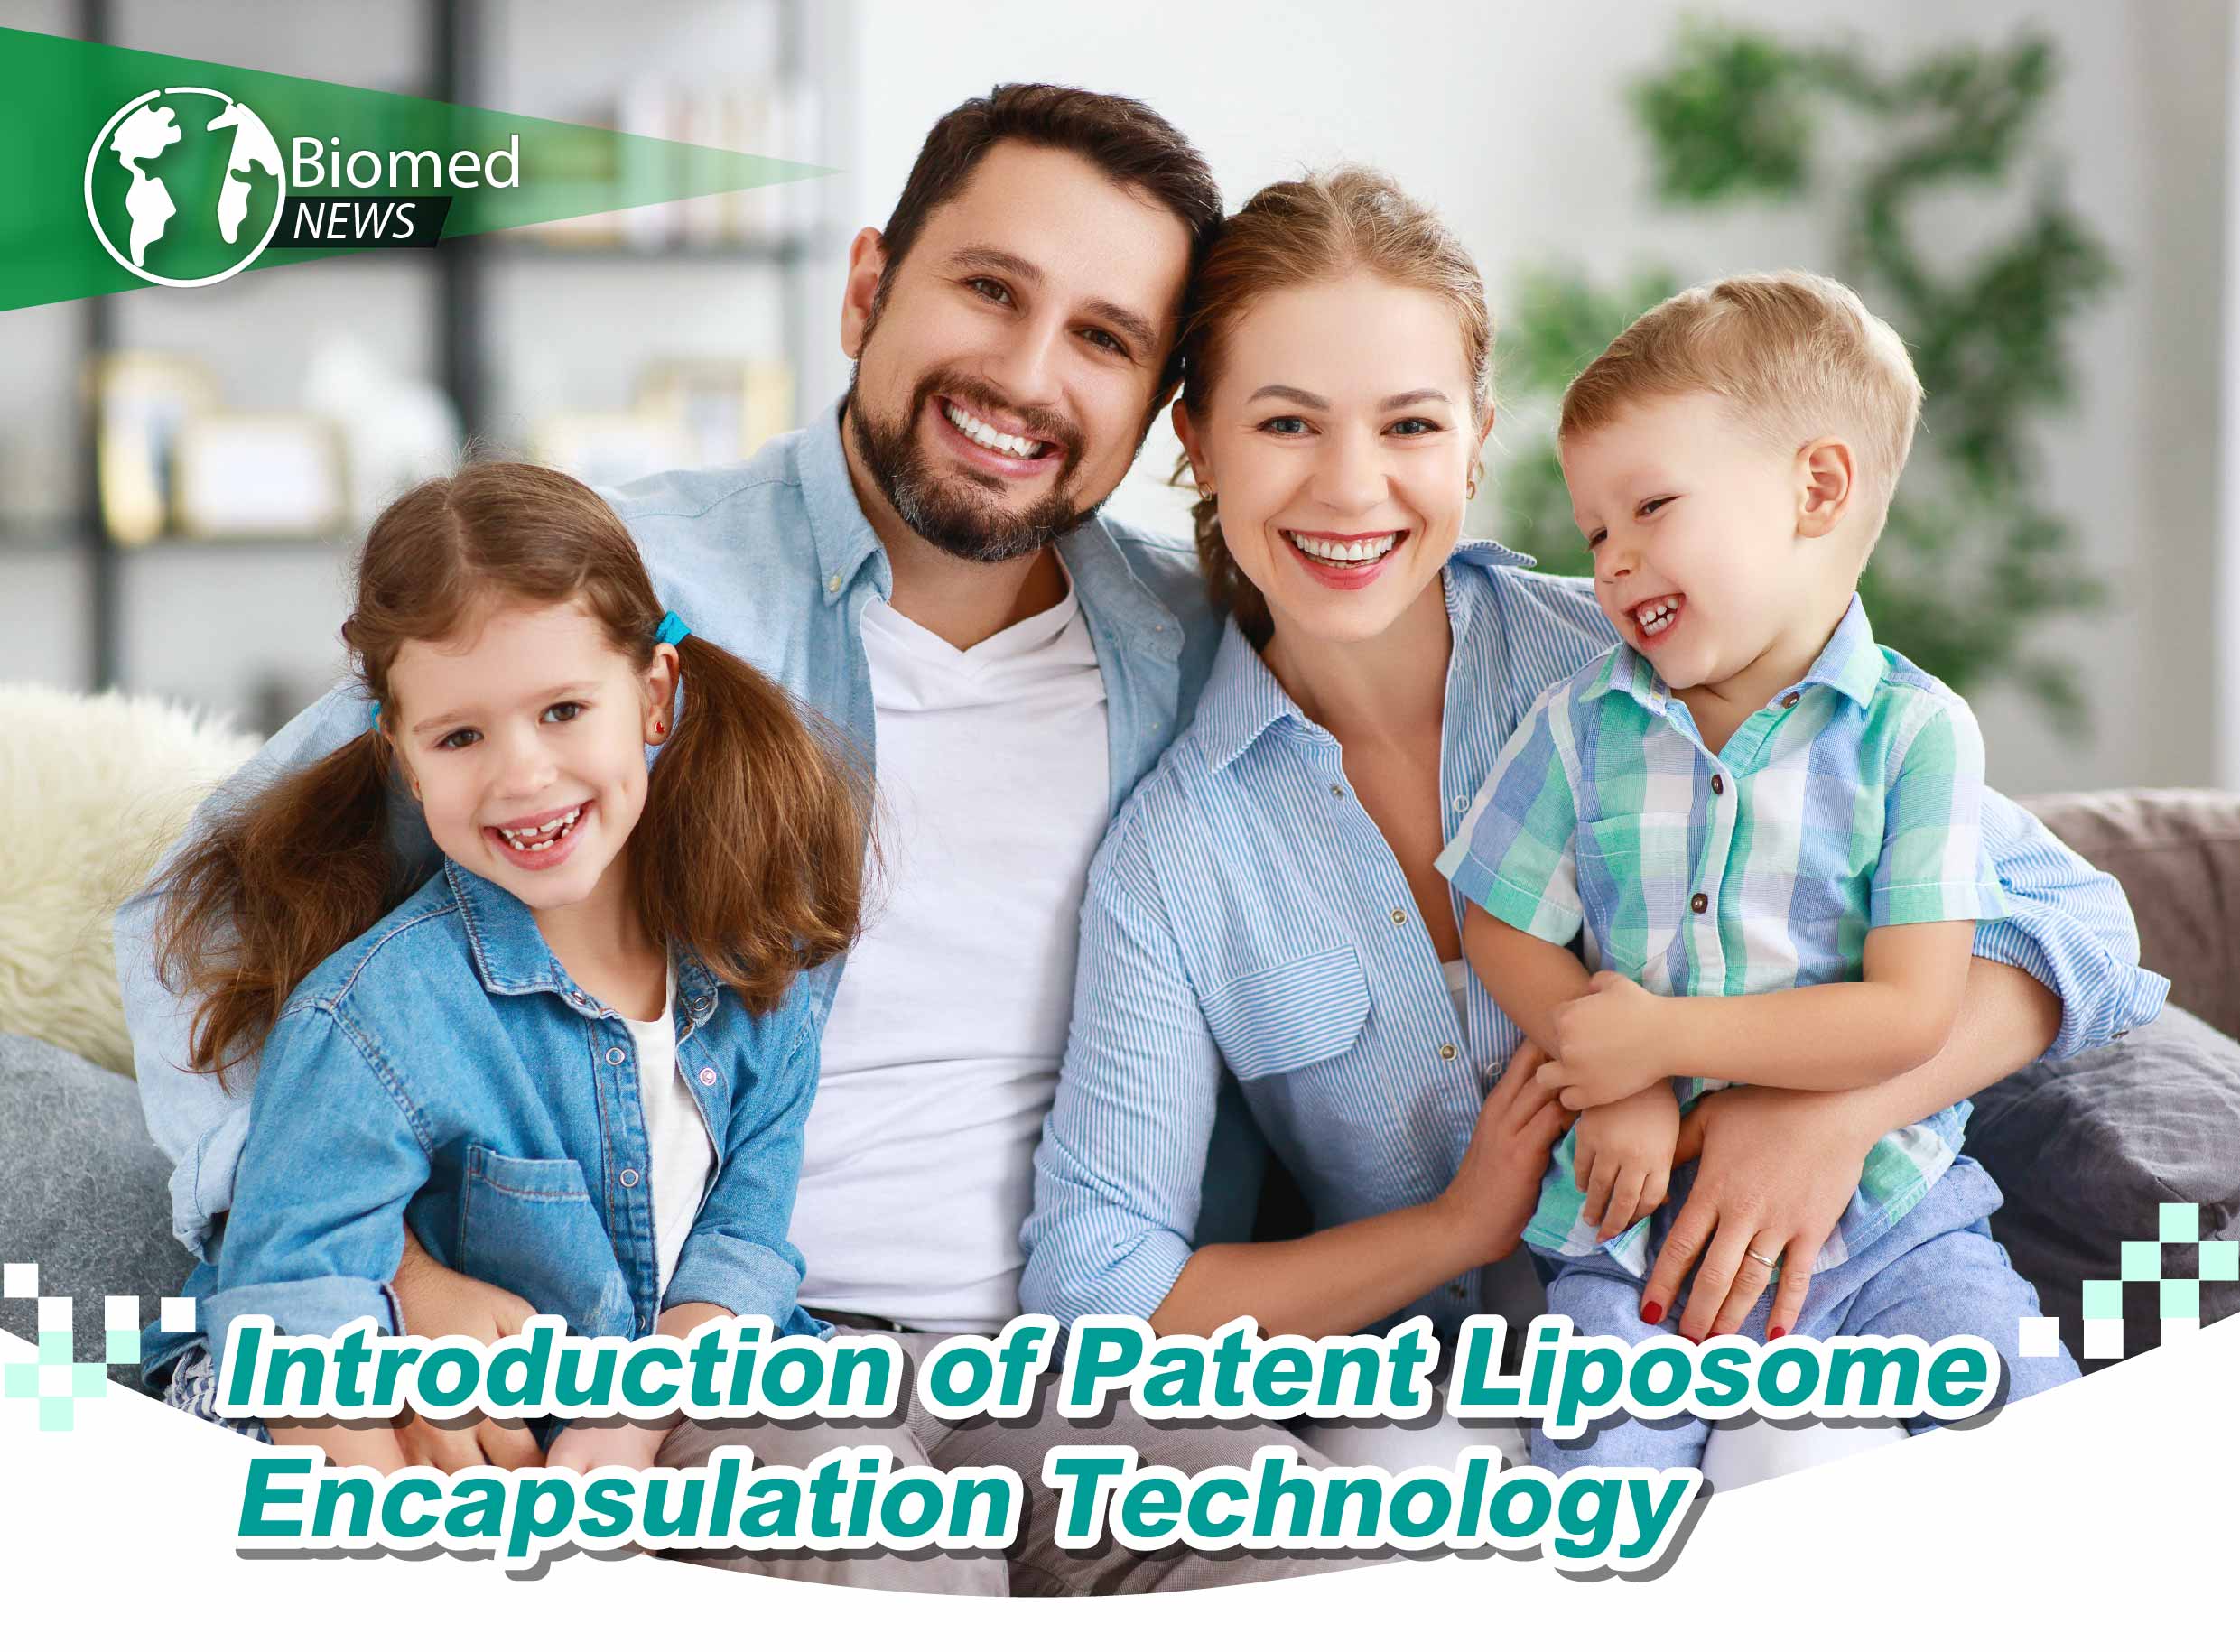  Patent Liposome Encapsulation Technology
